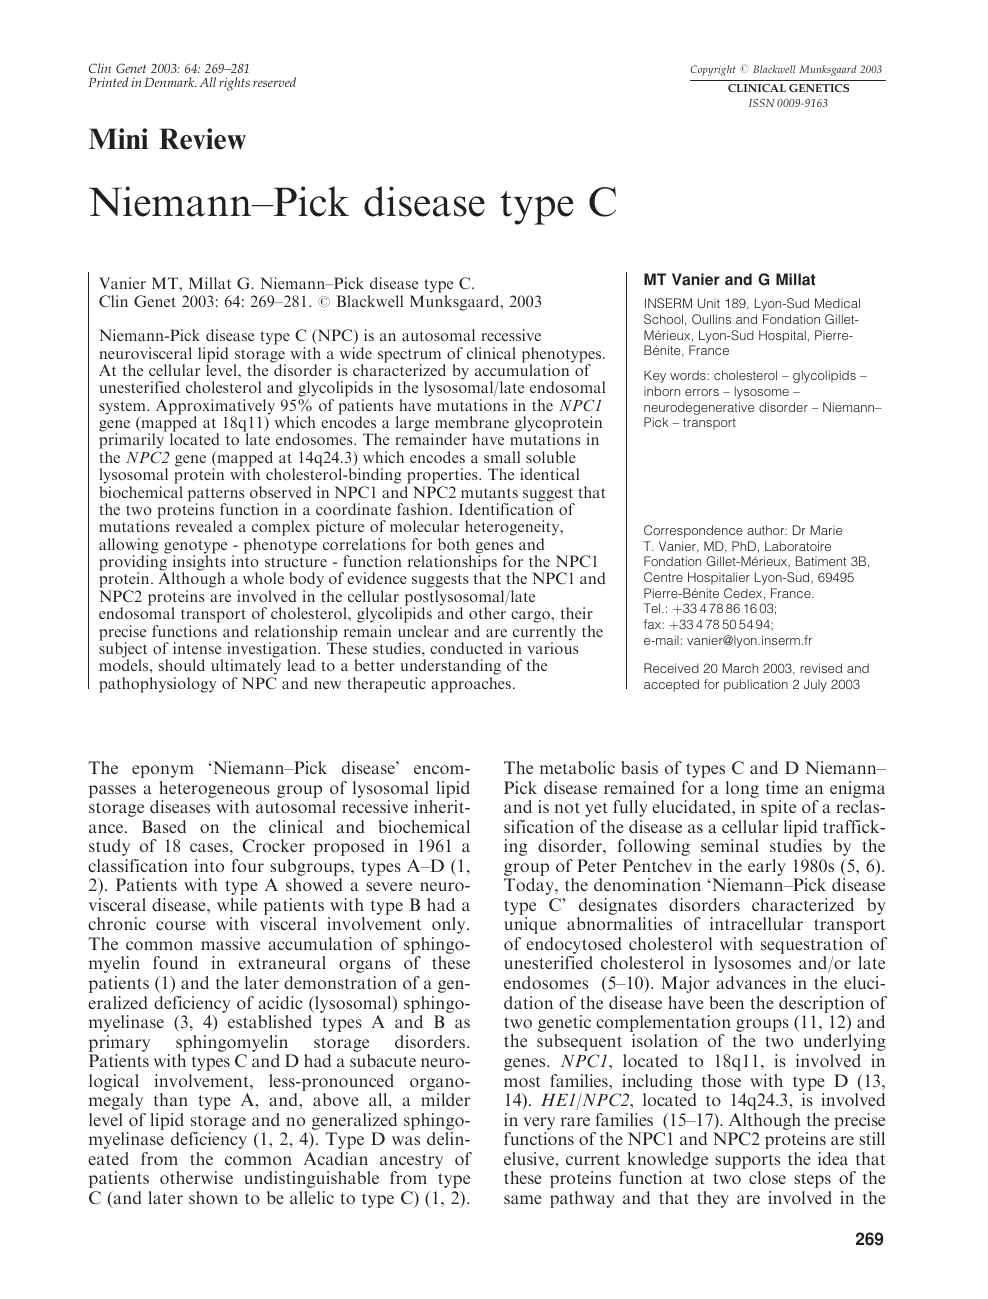 Laboratory diagnosis of Niemann-Pick disease type C: the filipin staining  test.